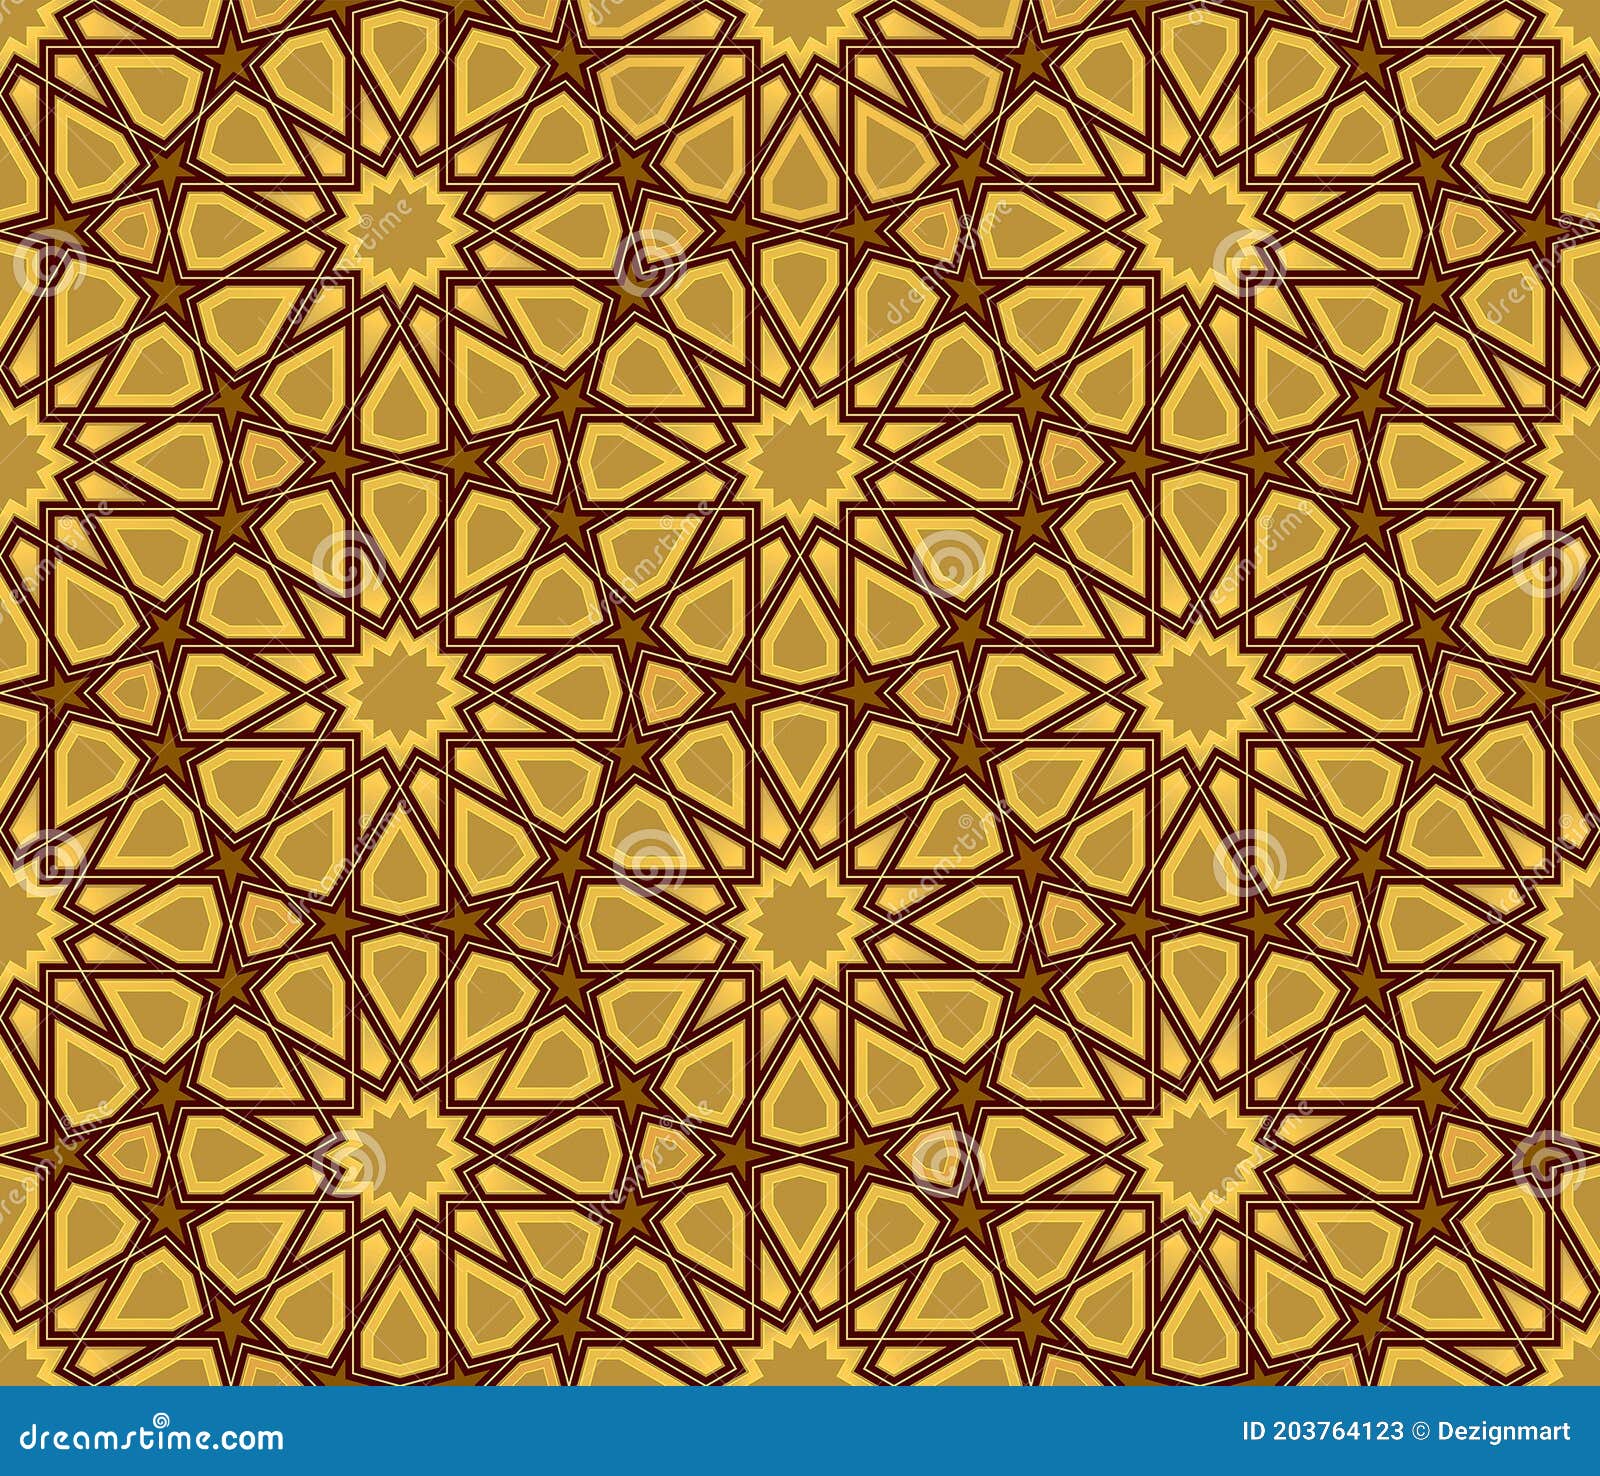 Islamic Star Pattern Background Stock Illustration - Illustration of ...